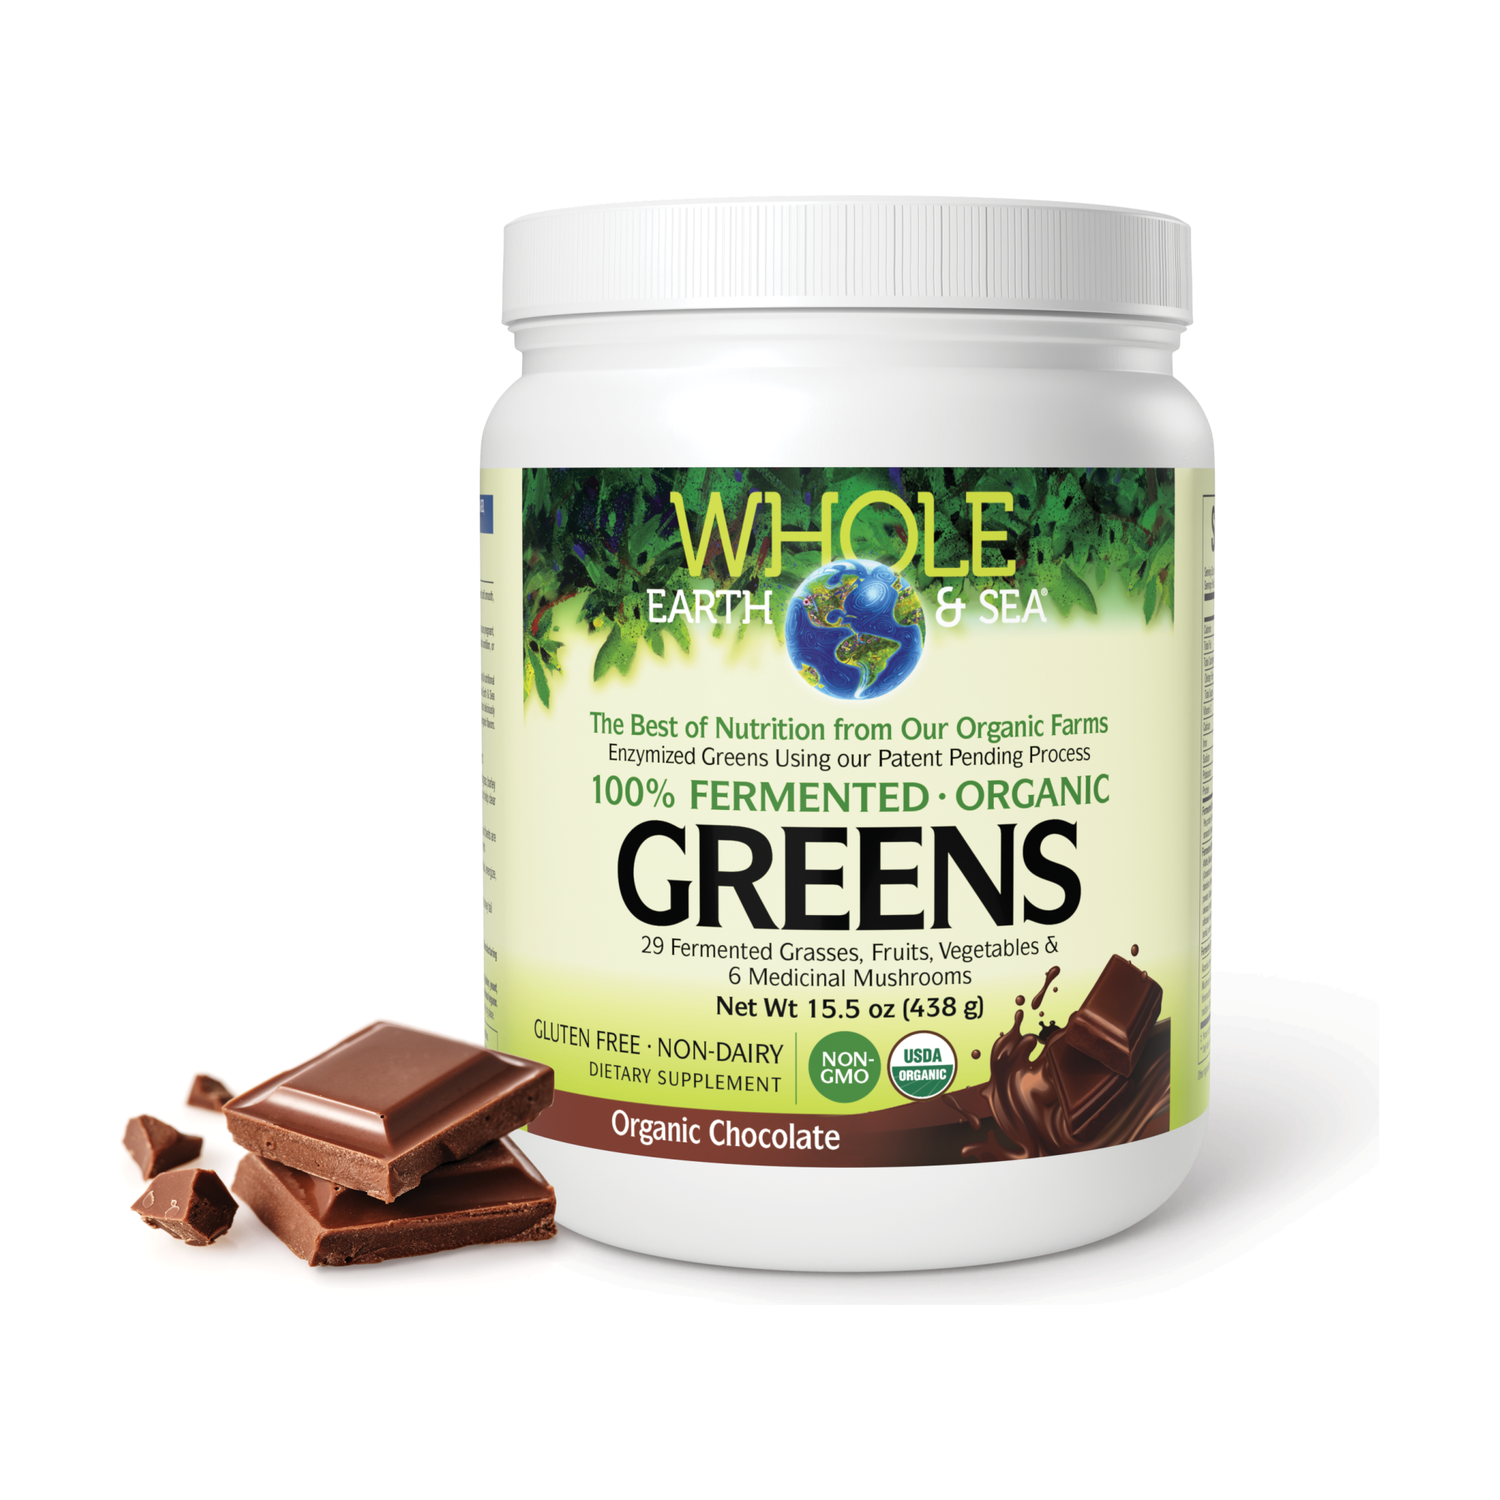 100% Fermented Organic Greens Chocolate for Whole Earth & Sea® |variant|hi-res|35524U